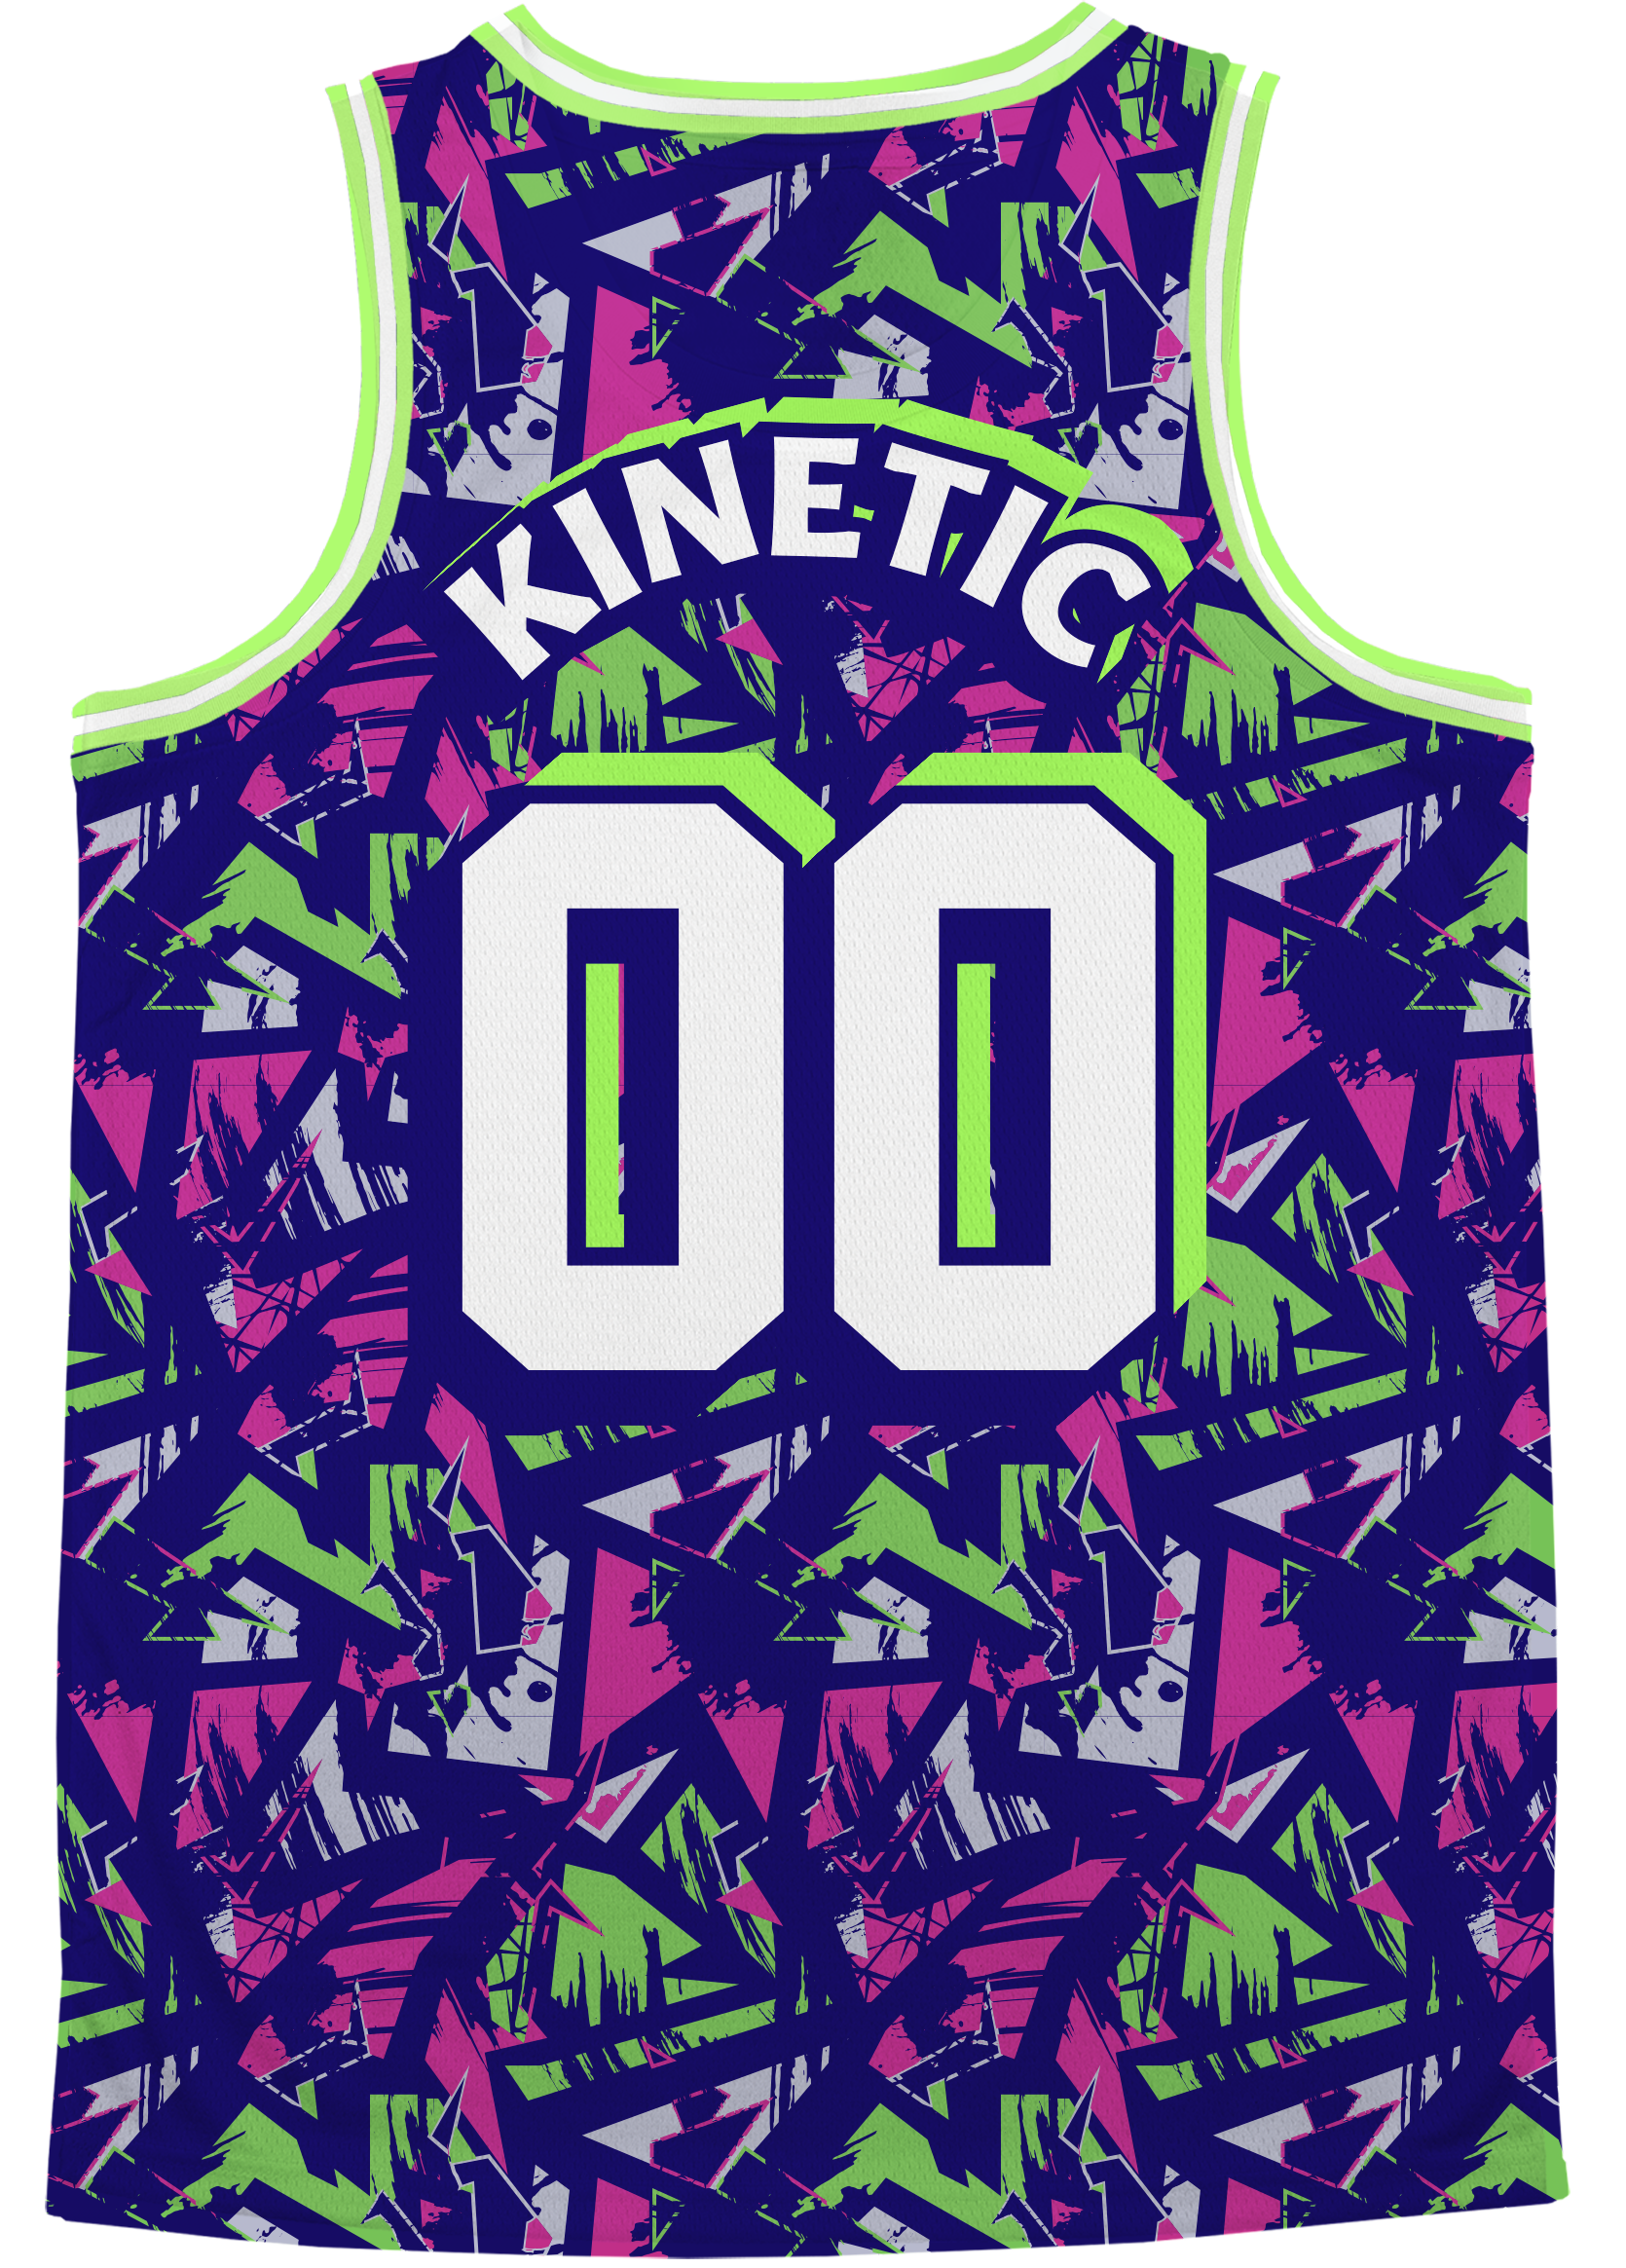 SIGMA PI - Purple Shrouds Basketball Jersey